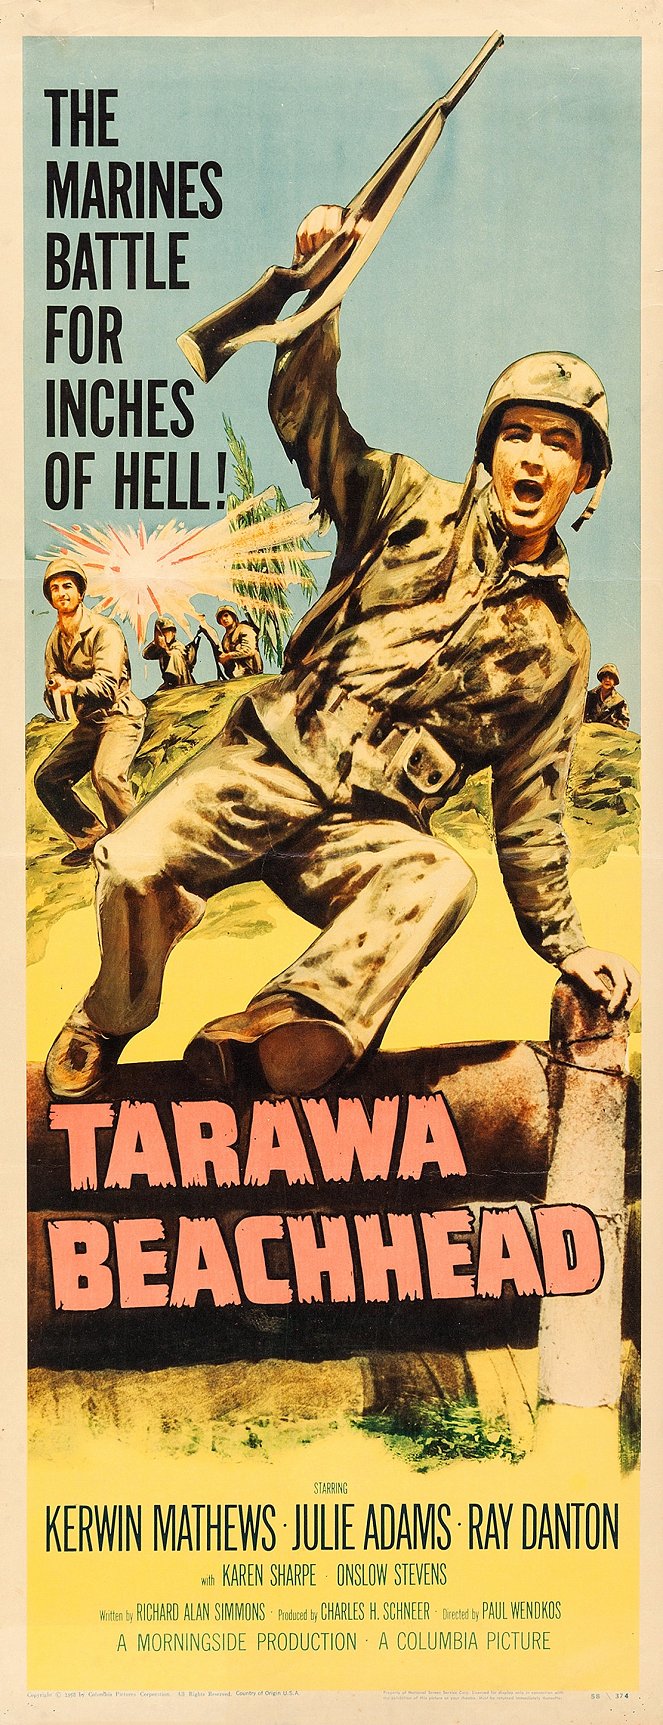 Tarawa Beachhead - Posters